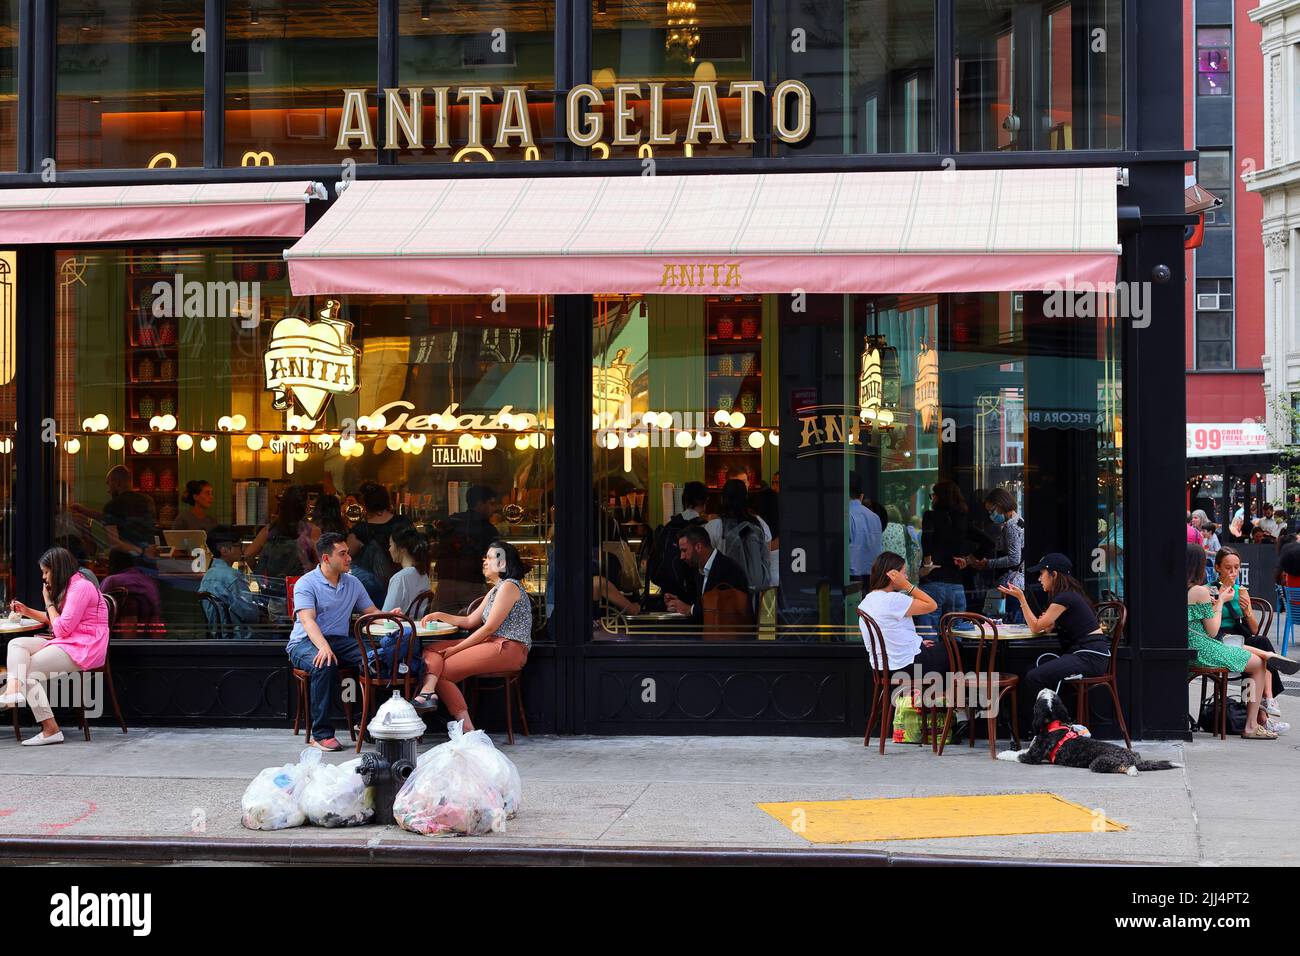 Anita La Mamma del Gelato, 1141 Broadway, New York, NY. exterior storefront of an Israeli gelato shop in Manhattan nomad. Stock Photo